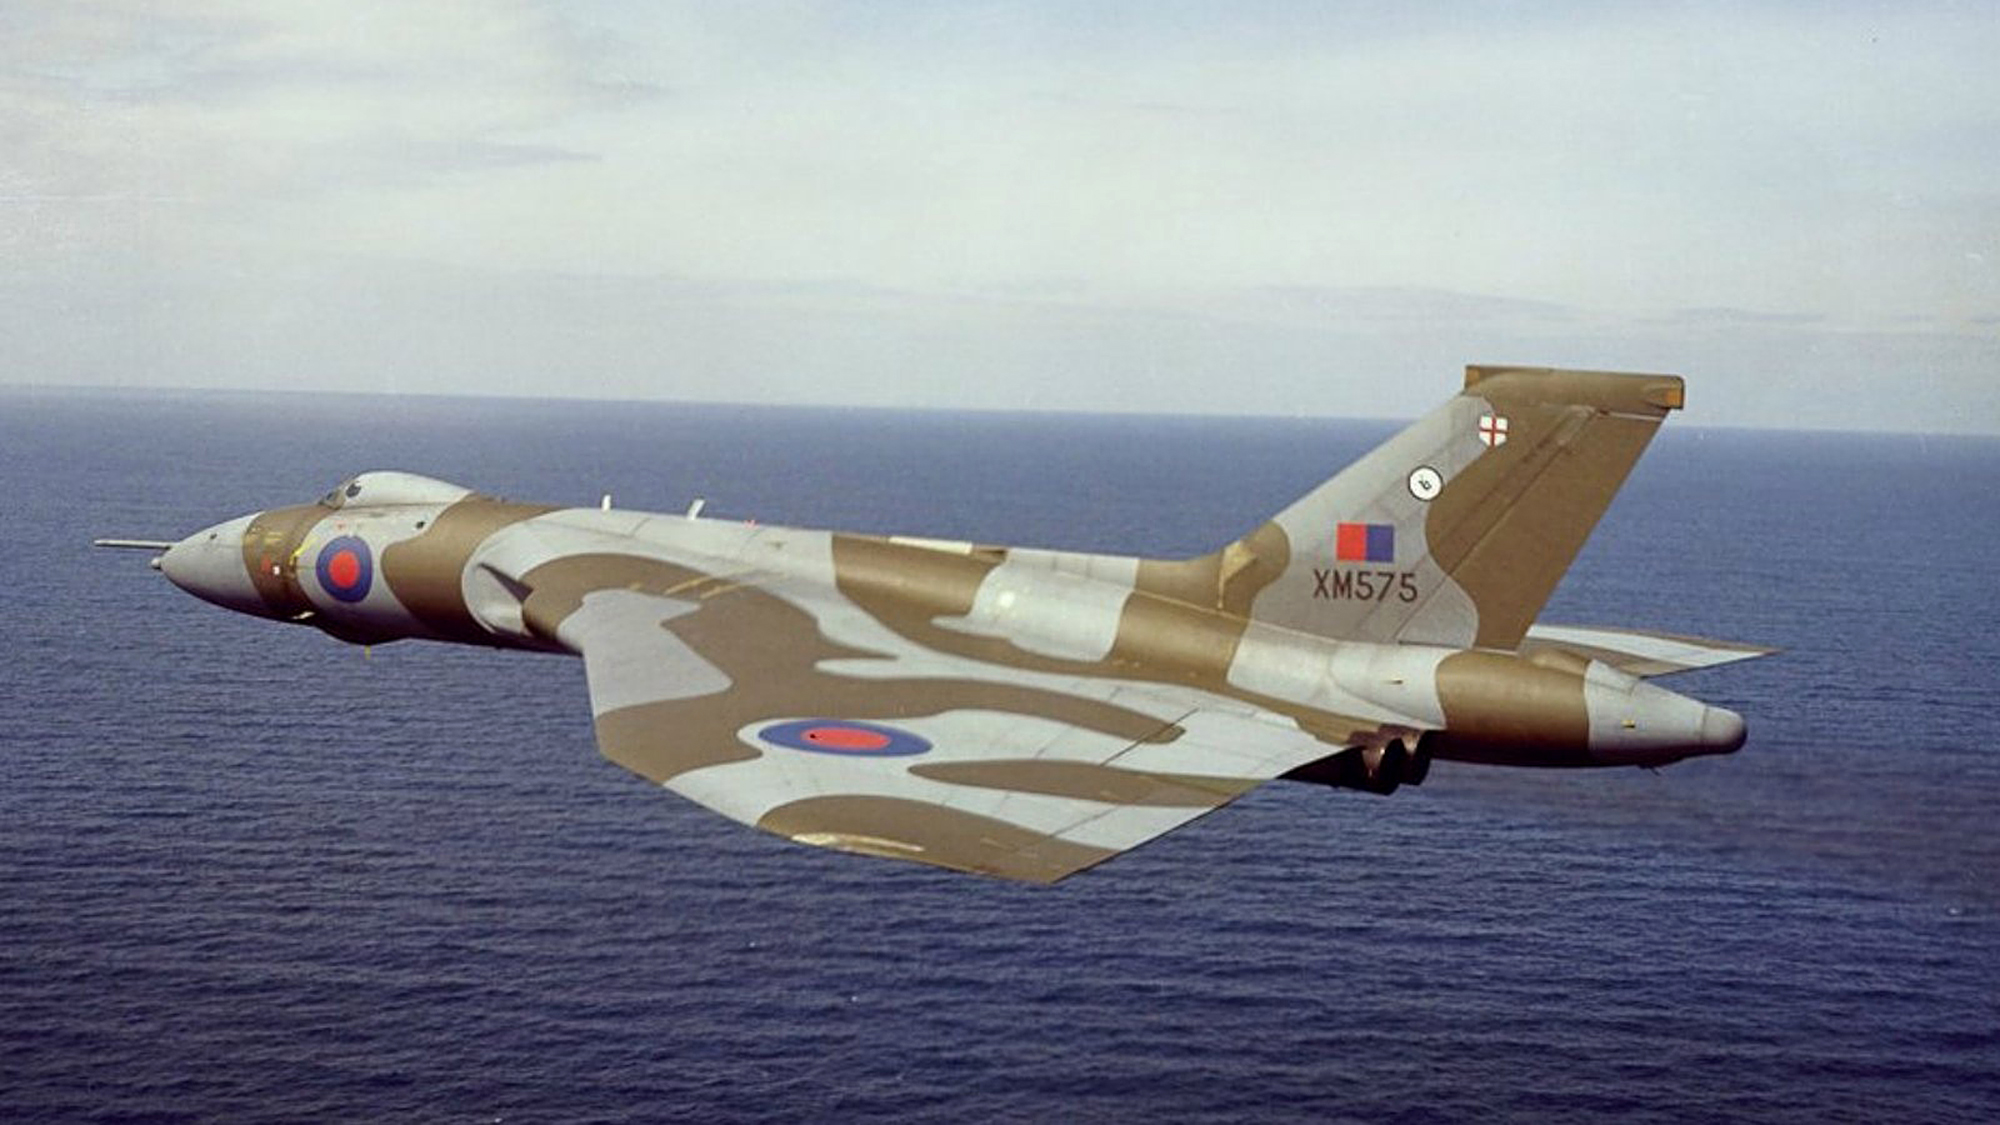 The Missing Vulcan - Falklands 1982